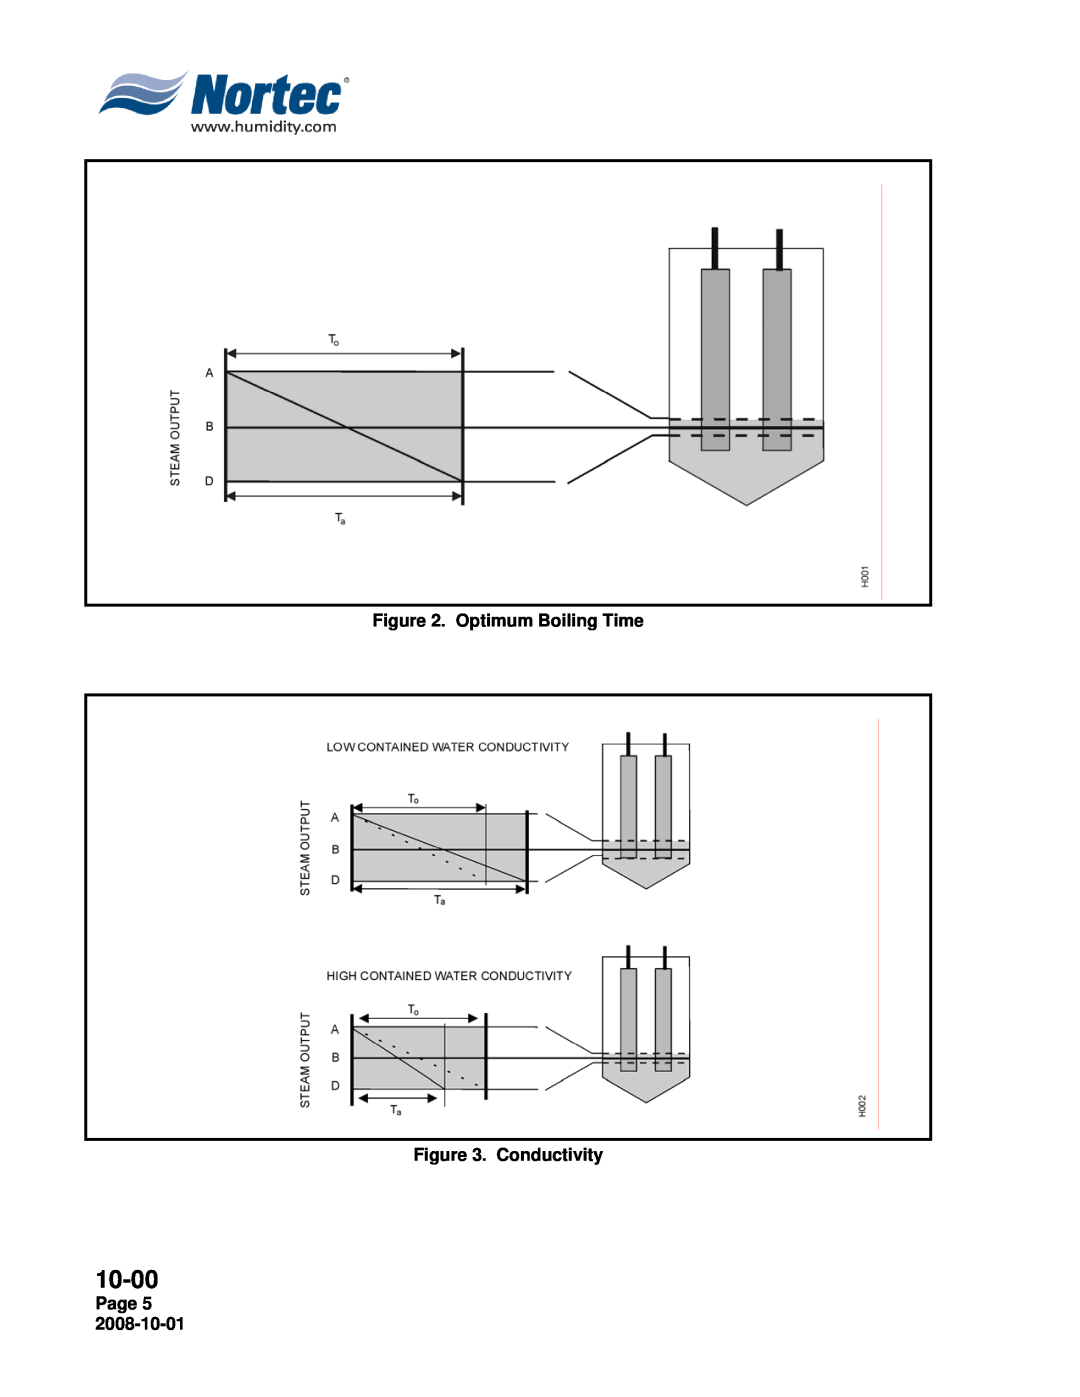 Nortec NHTC, NHPC manual 10-00, Optimum Boiling Time, Conductivity, Page 5 